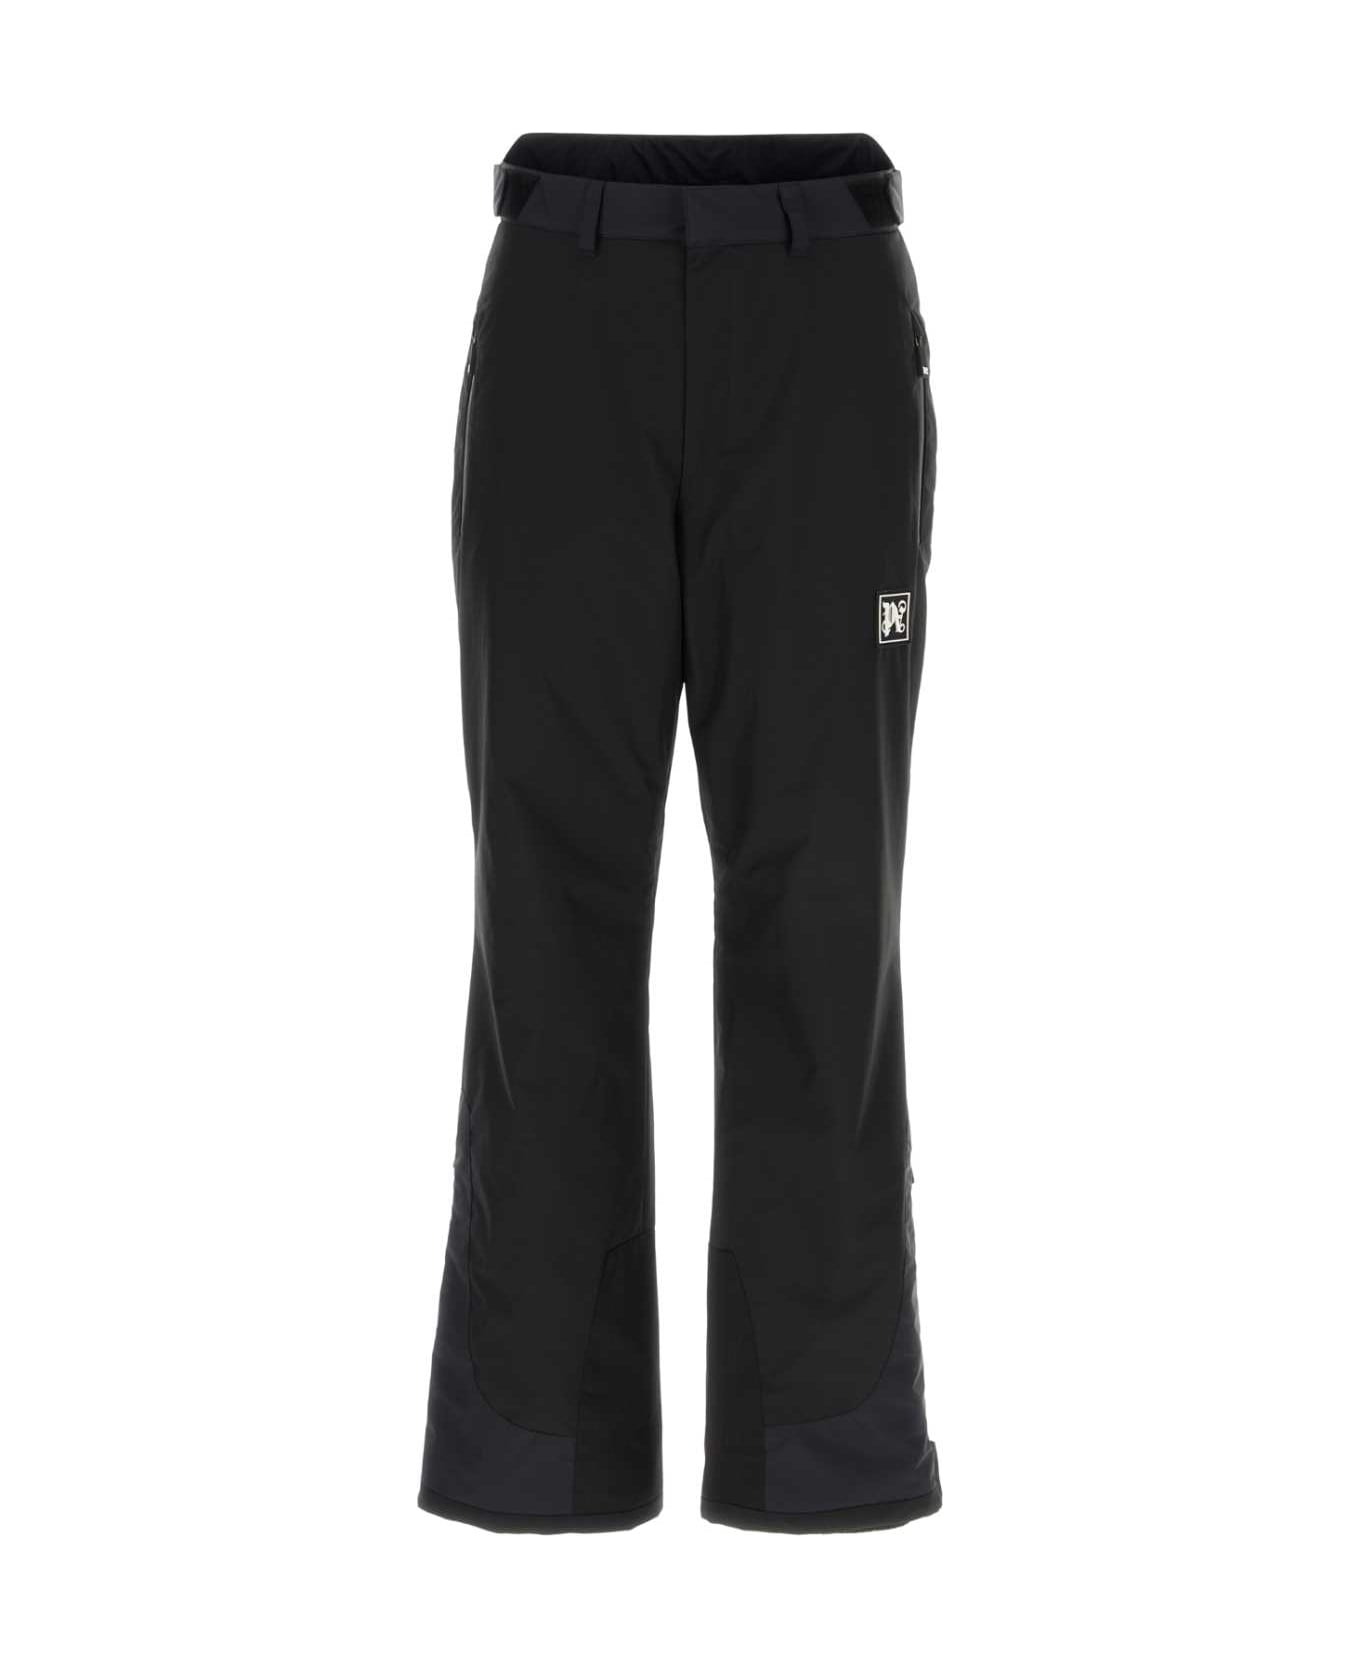 Palm Angels Black Polyester Ski Pant - BLACKWHITE